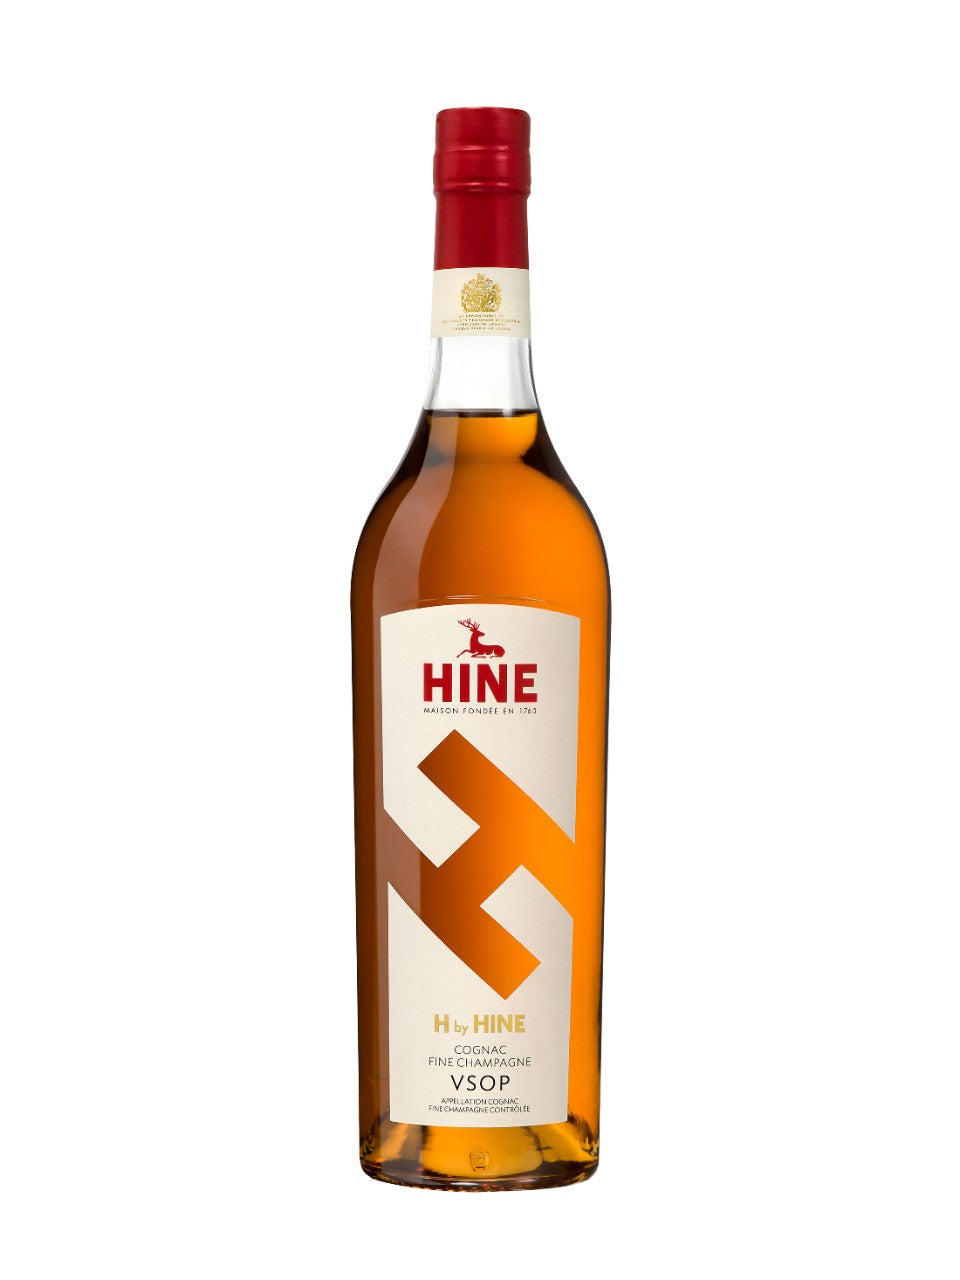 Hine H By Hine VSOP Fine Champagne Cognac  750 mL bottle